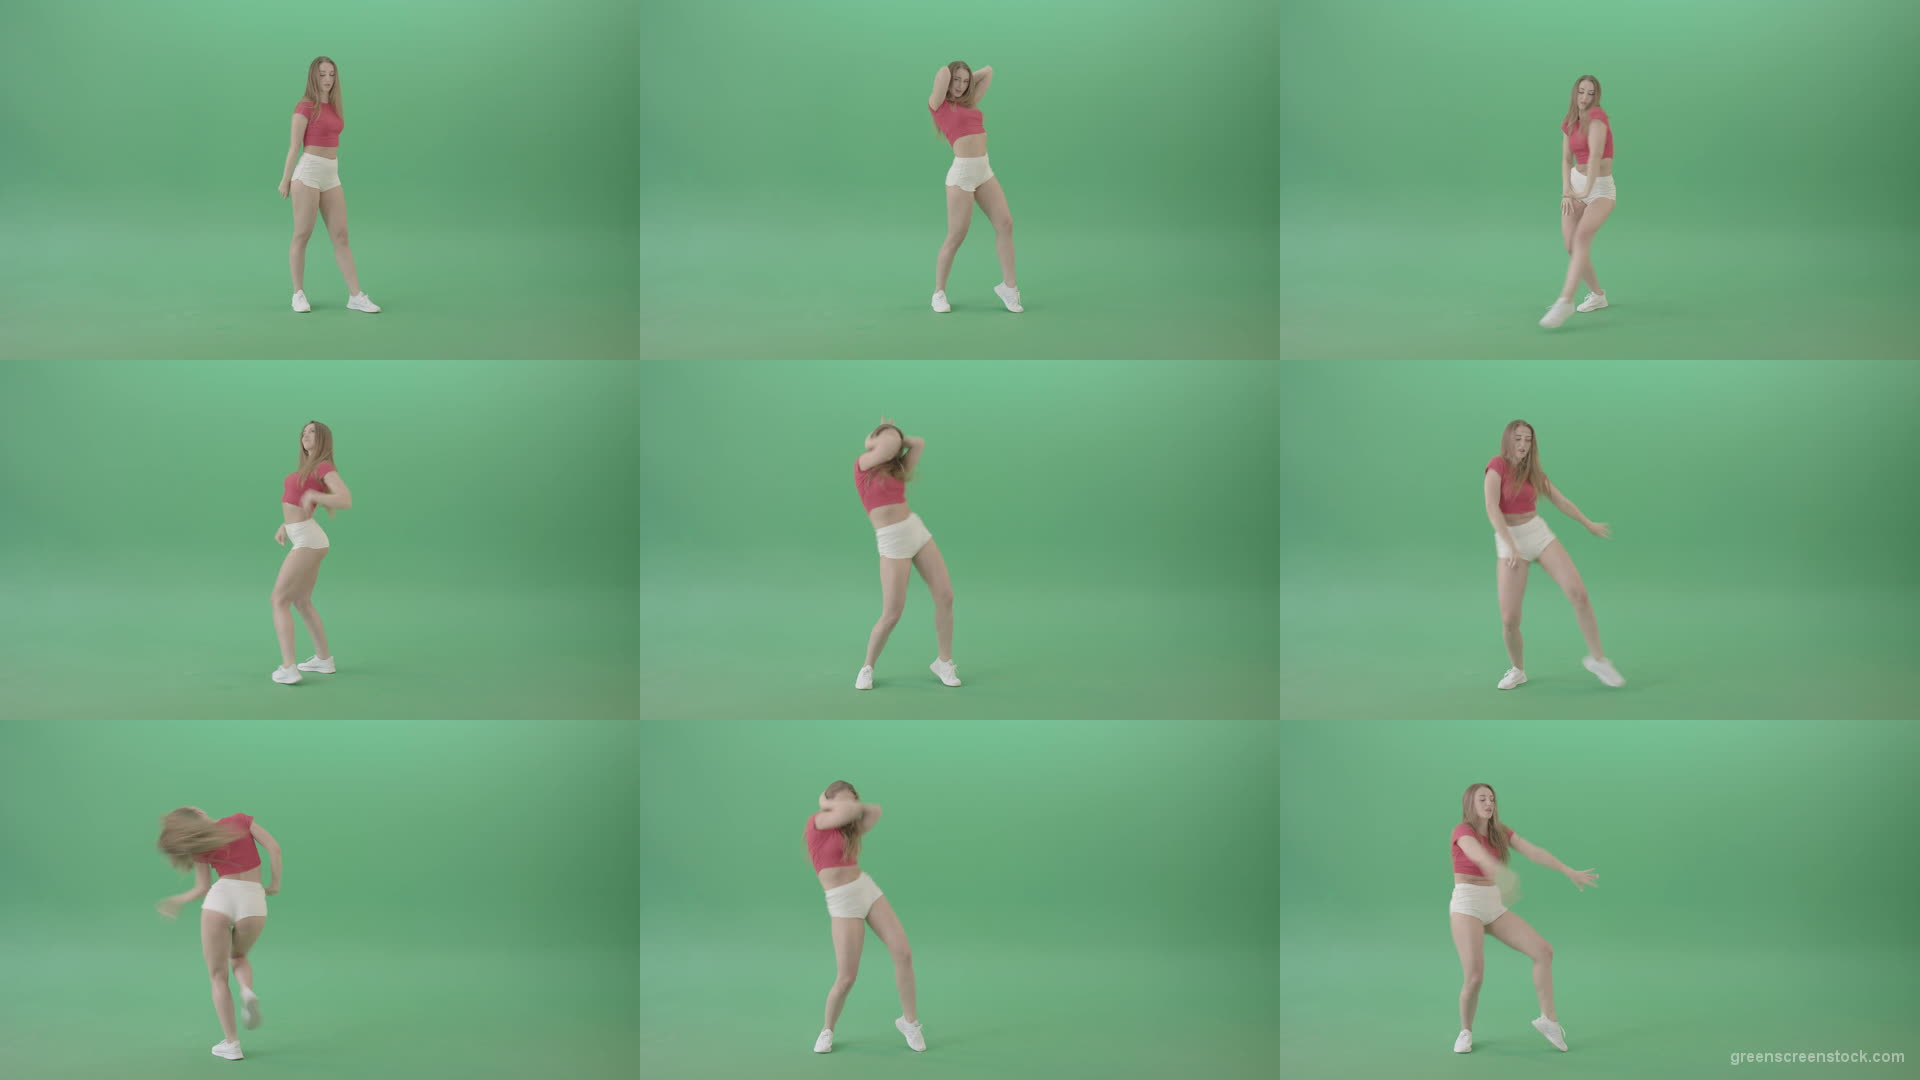 Sexy-erotic-dance-by-blondie-twerking-girl-over-green-screen-4K-Video-Clip-1920 Green Screen Stock